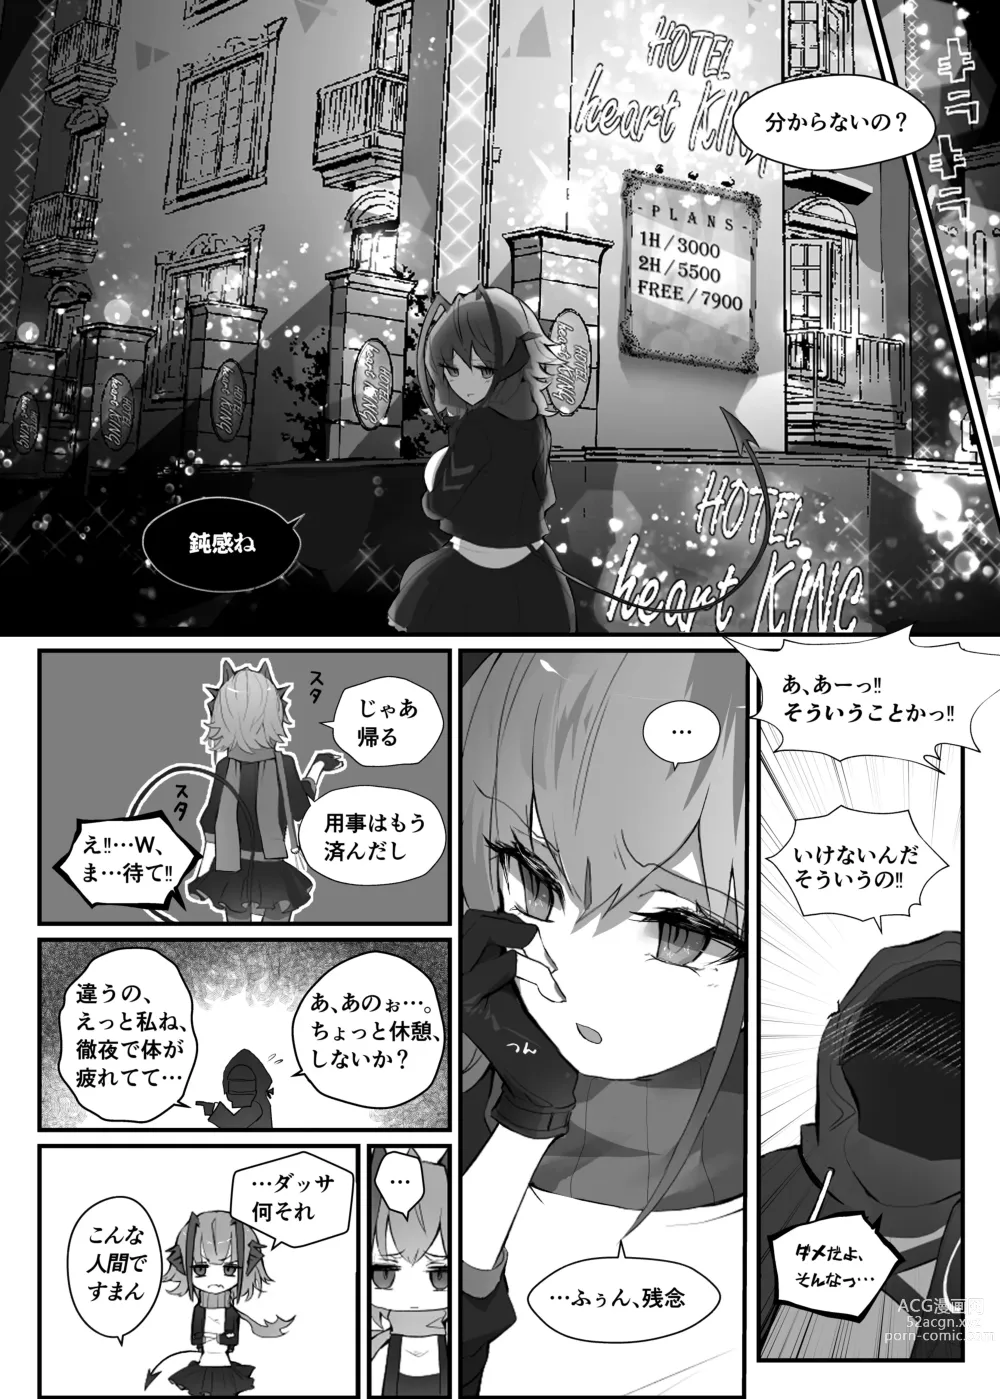 Page 6 of doujinshi Wを抱く本